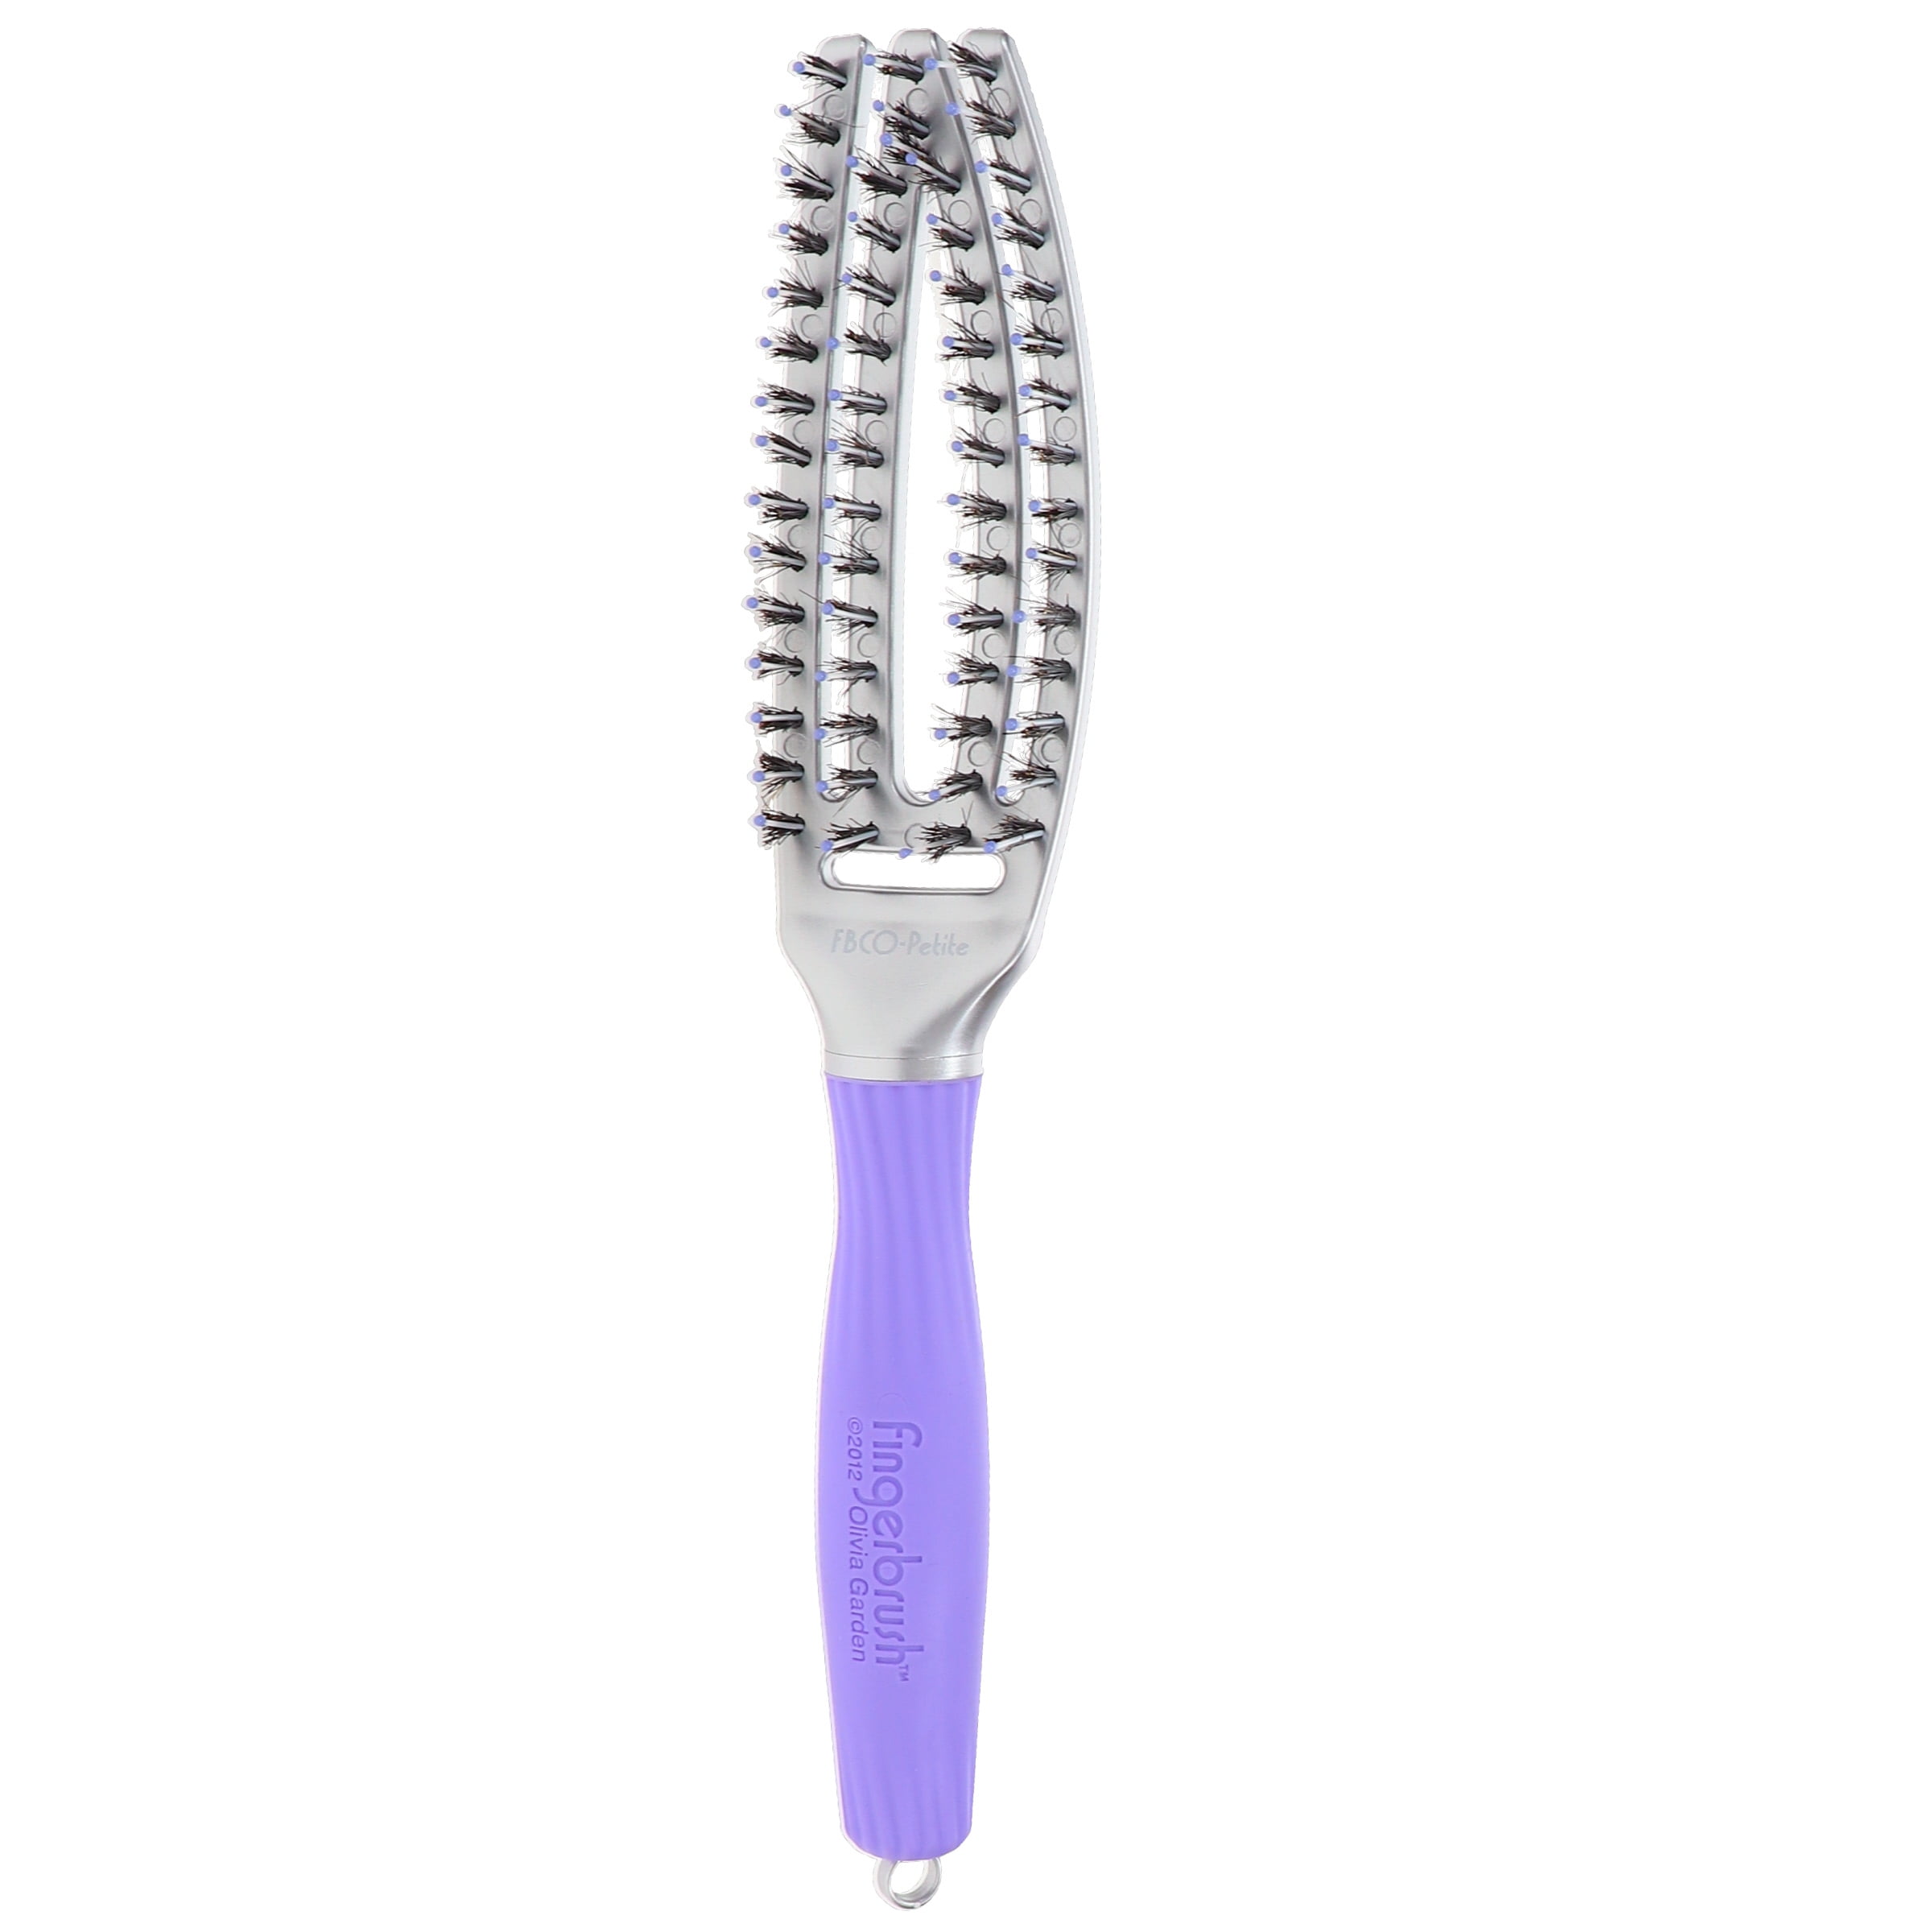 Olivia Garden Fingerbrush Curved & Vented Brush Petite Paddle